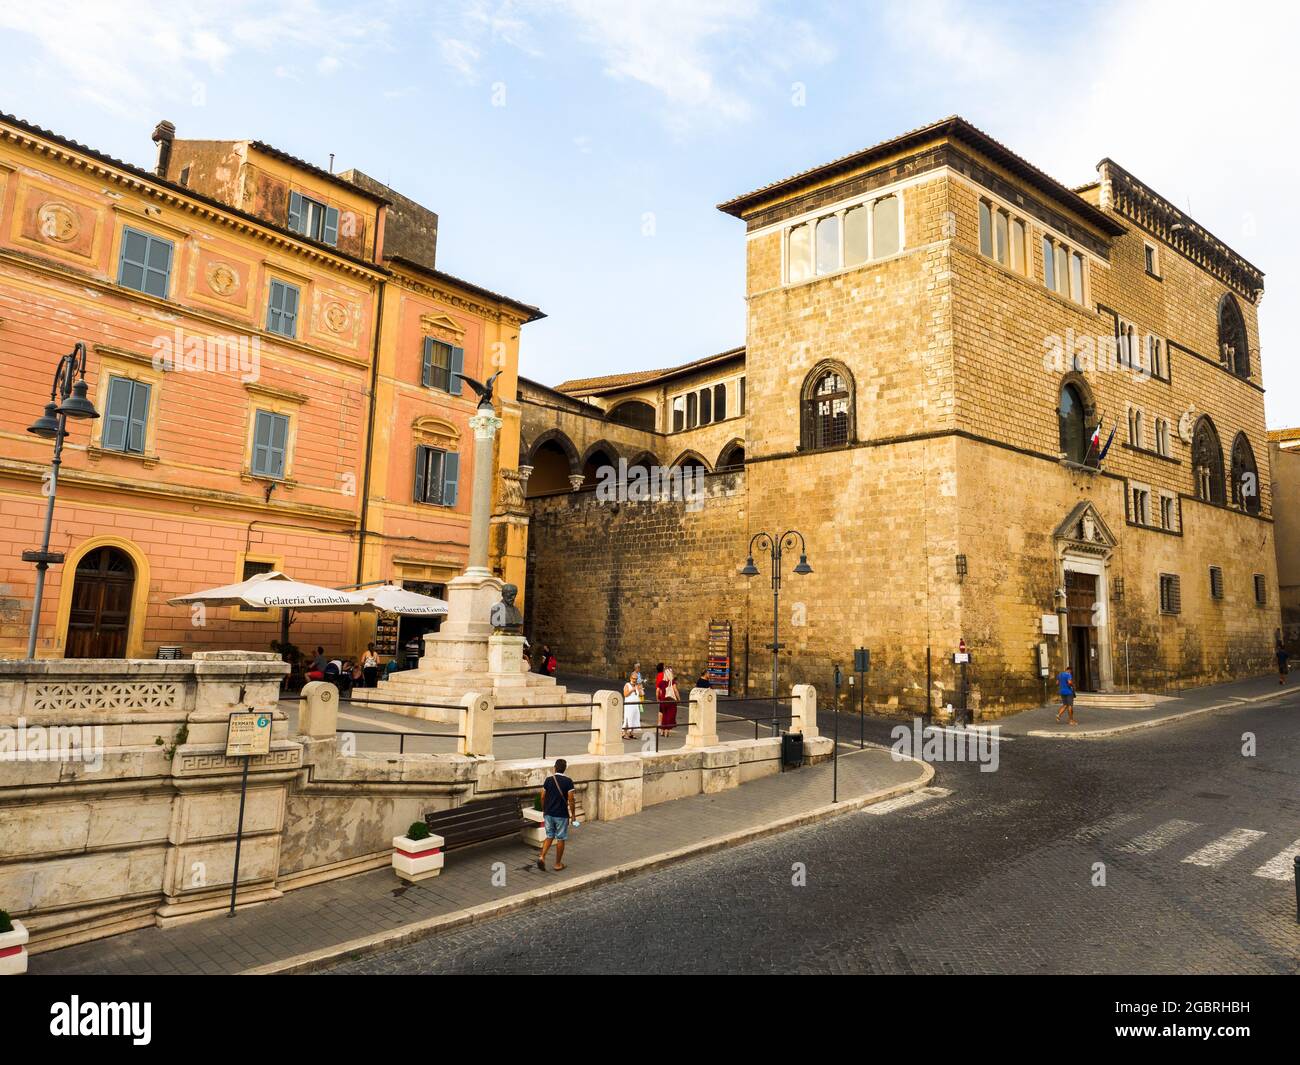 Der Renaissance Vitelleschi Palast, der das Nationale Archäologische Museum Tarquinia beherbergt - Tarquinia, Italien Stockfoto